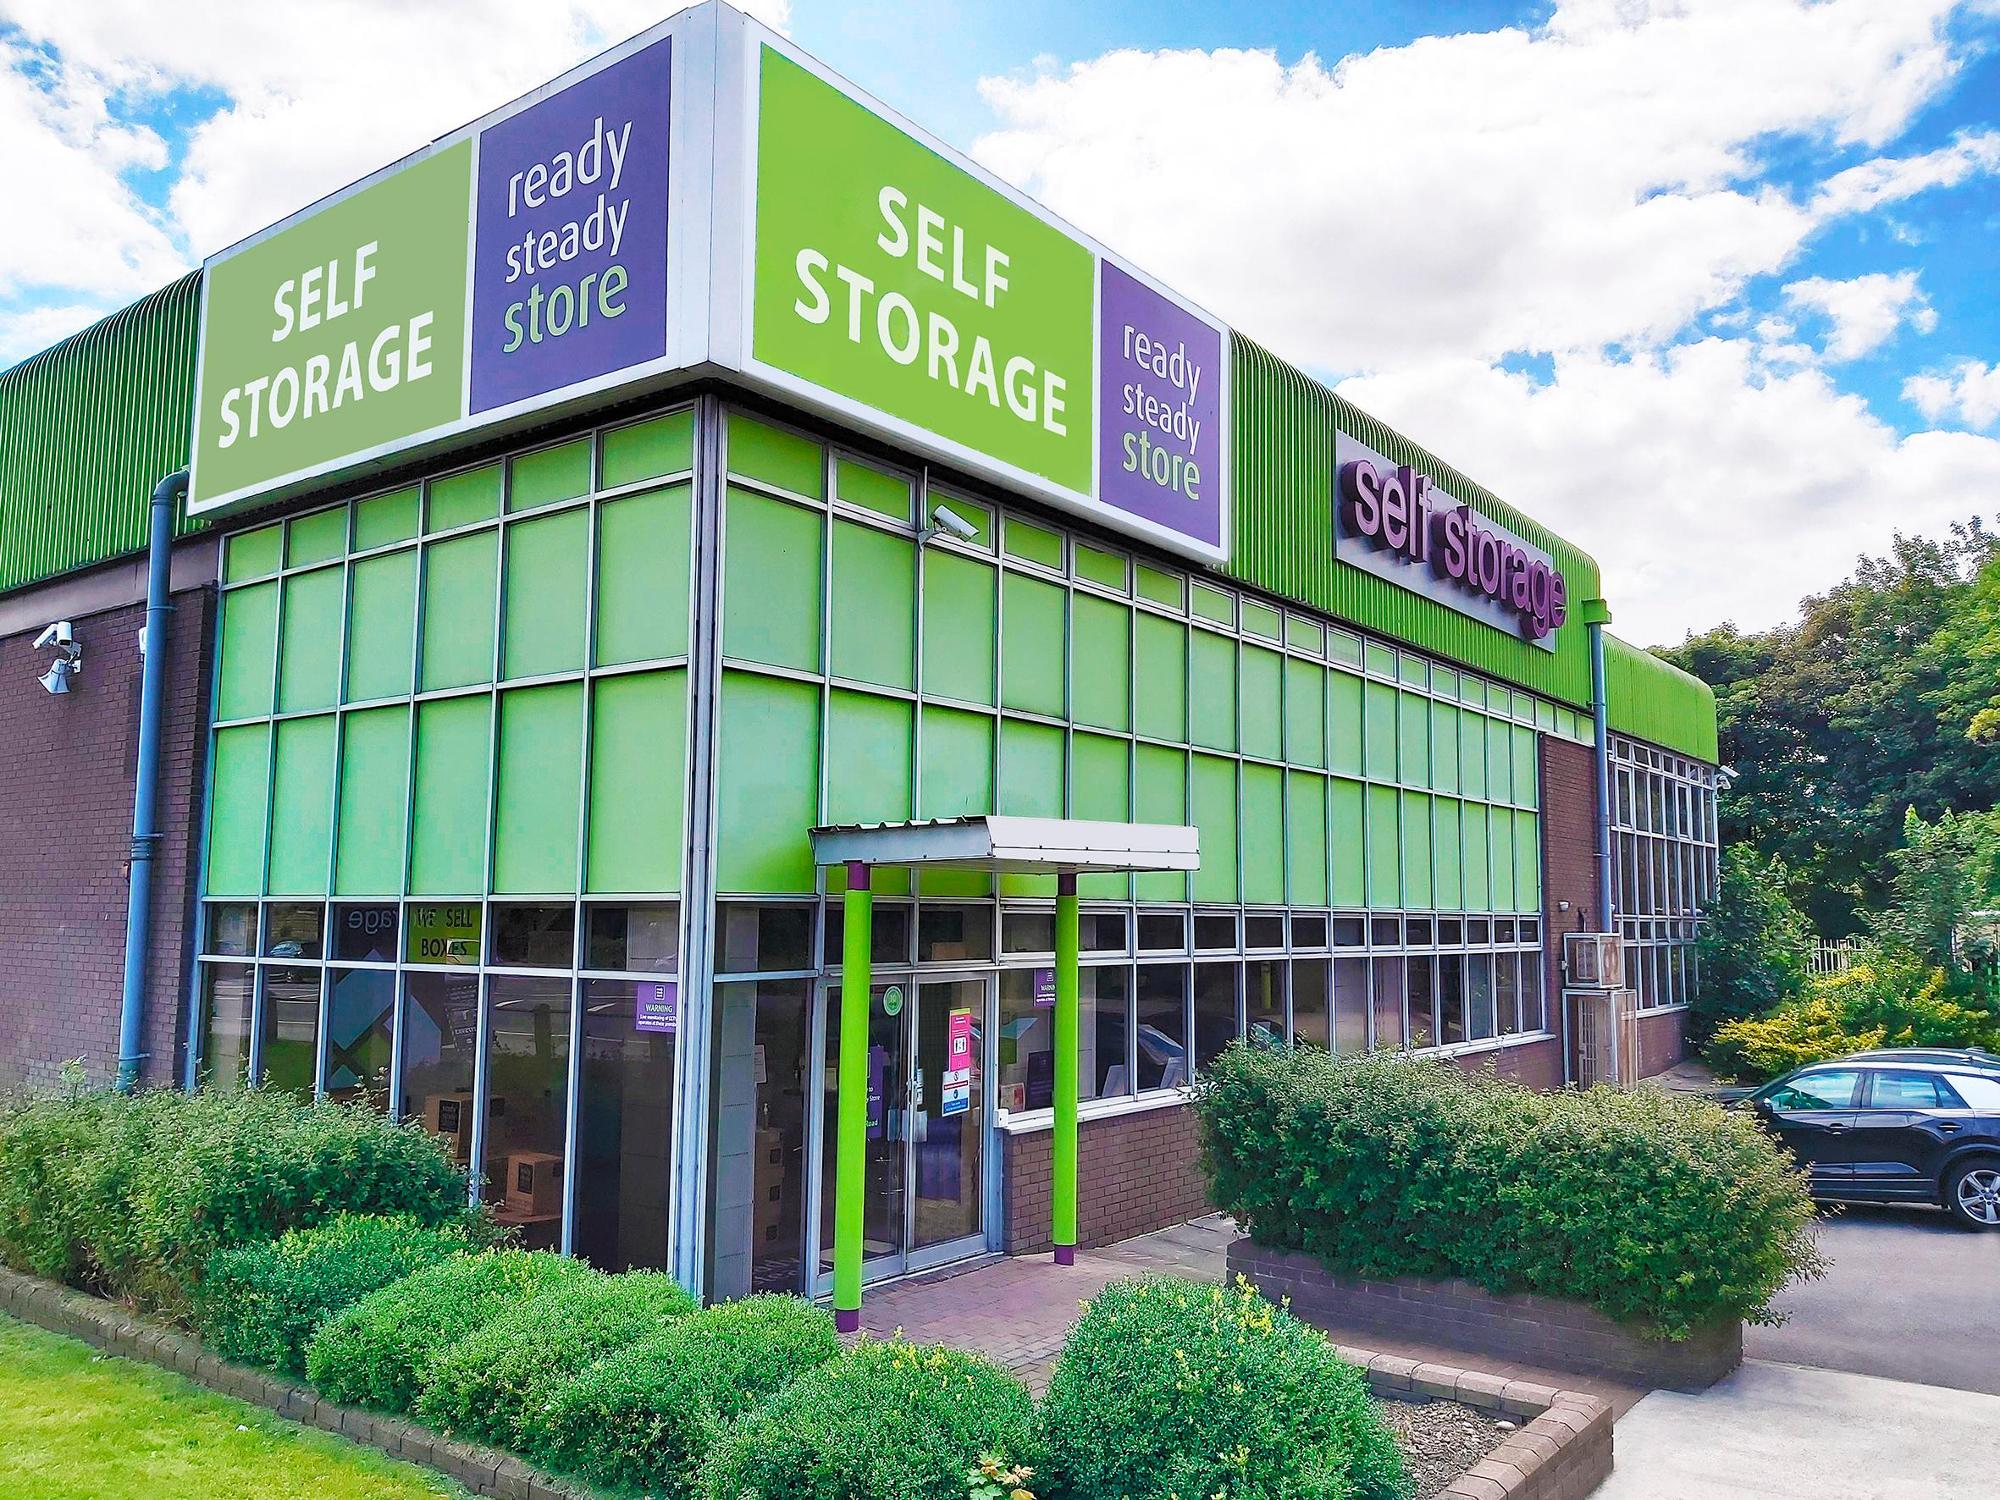 Ready Steady Store Self Storage Leeds Kirkstall Road Leeds 01132 244830